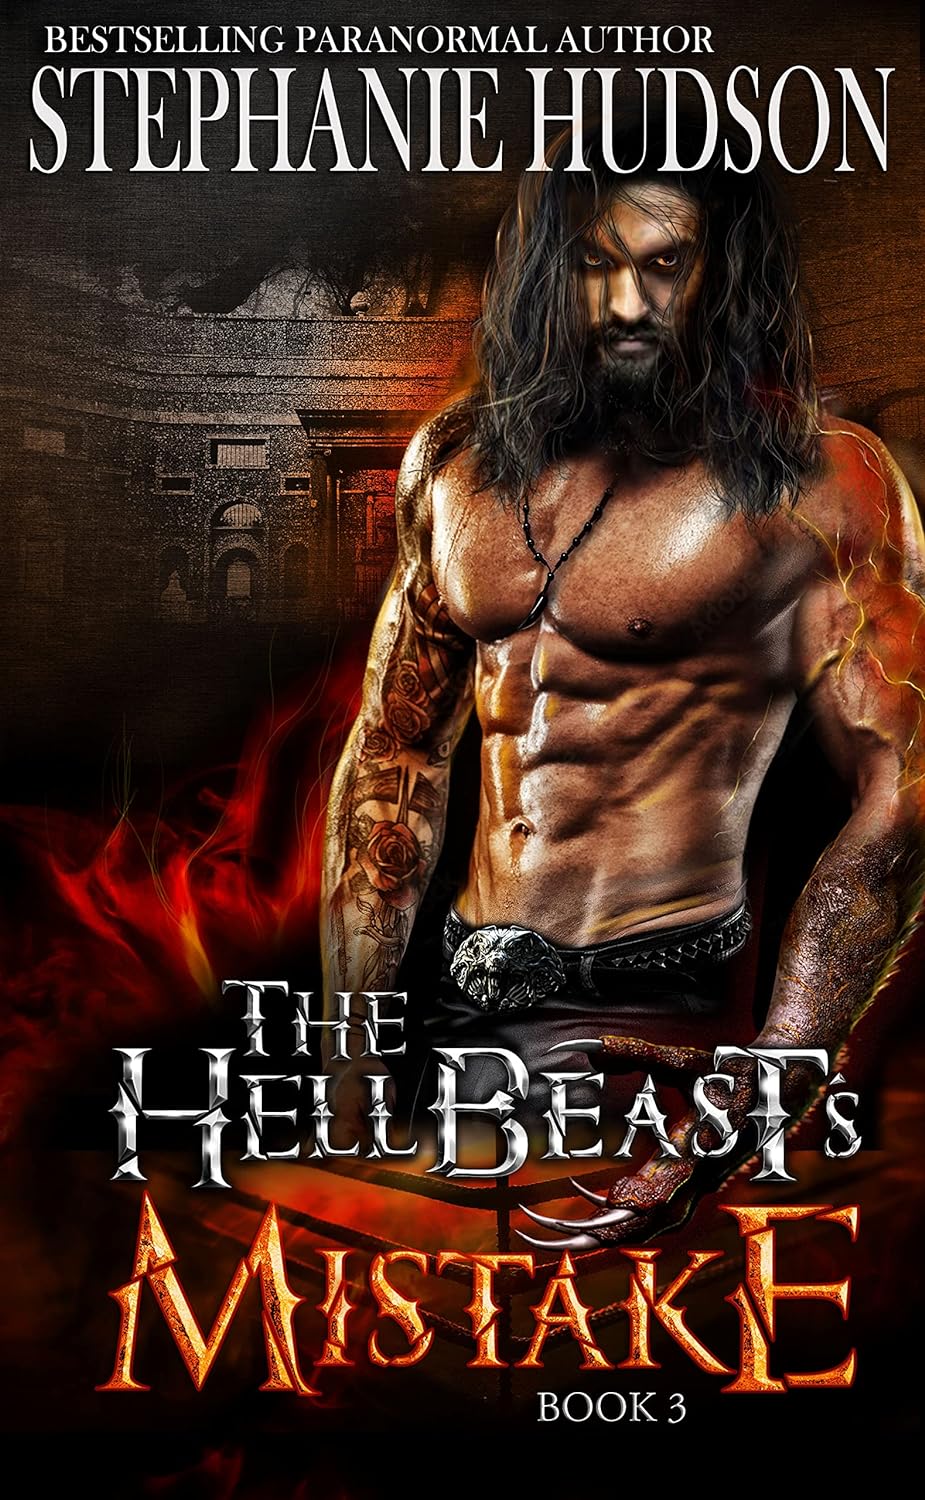 The HellBeast Mistake (The HellBeast King Book 3) by Stephanie Hudson